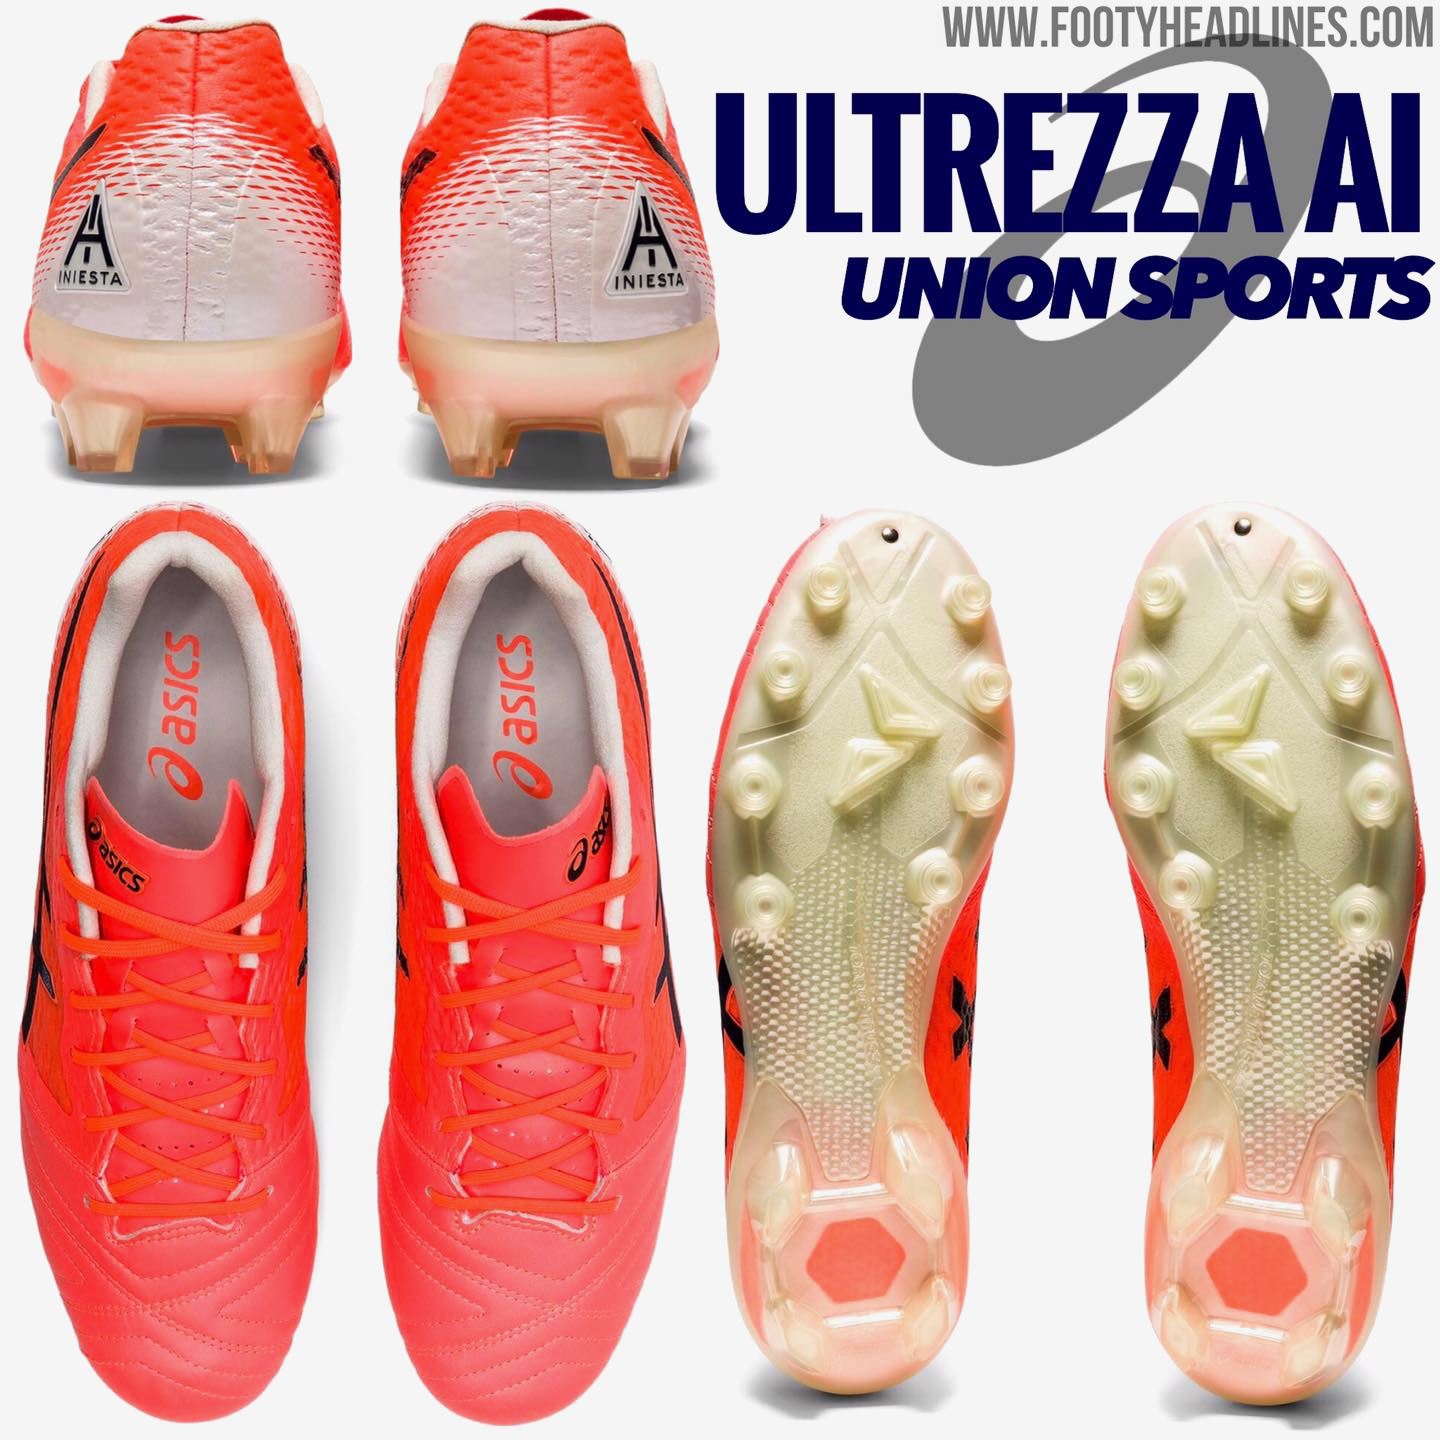 Asics Ultrezza AI Iniesta 2020-21 Signature Boots Released - Footy Headlines